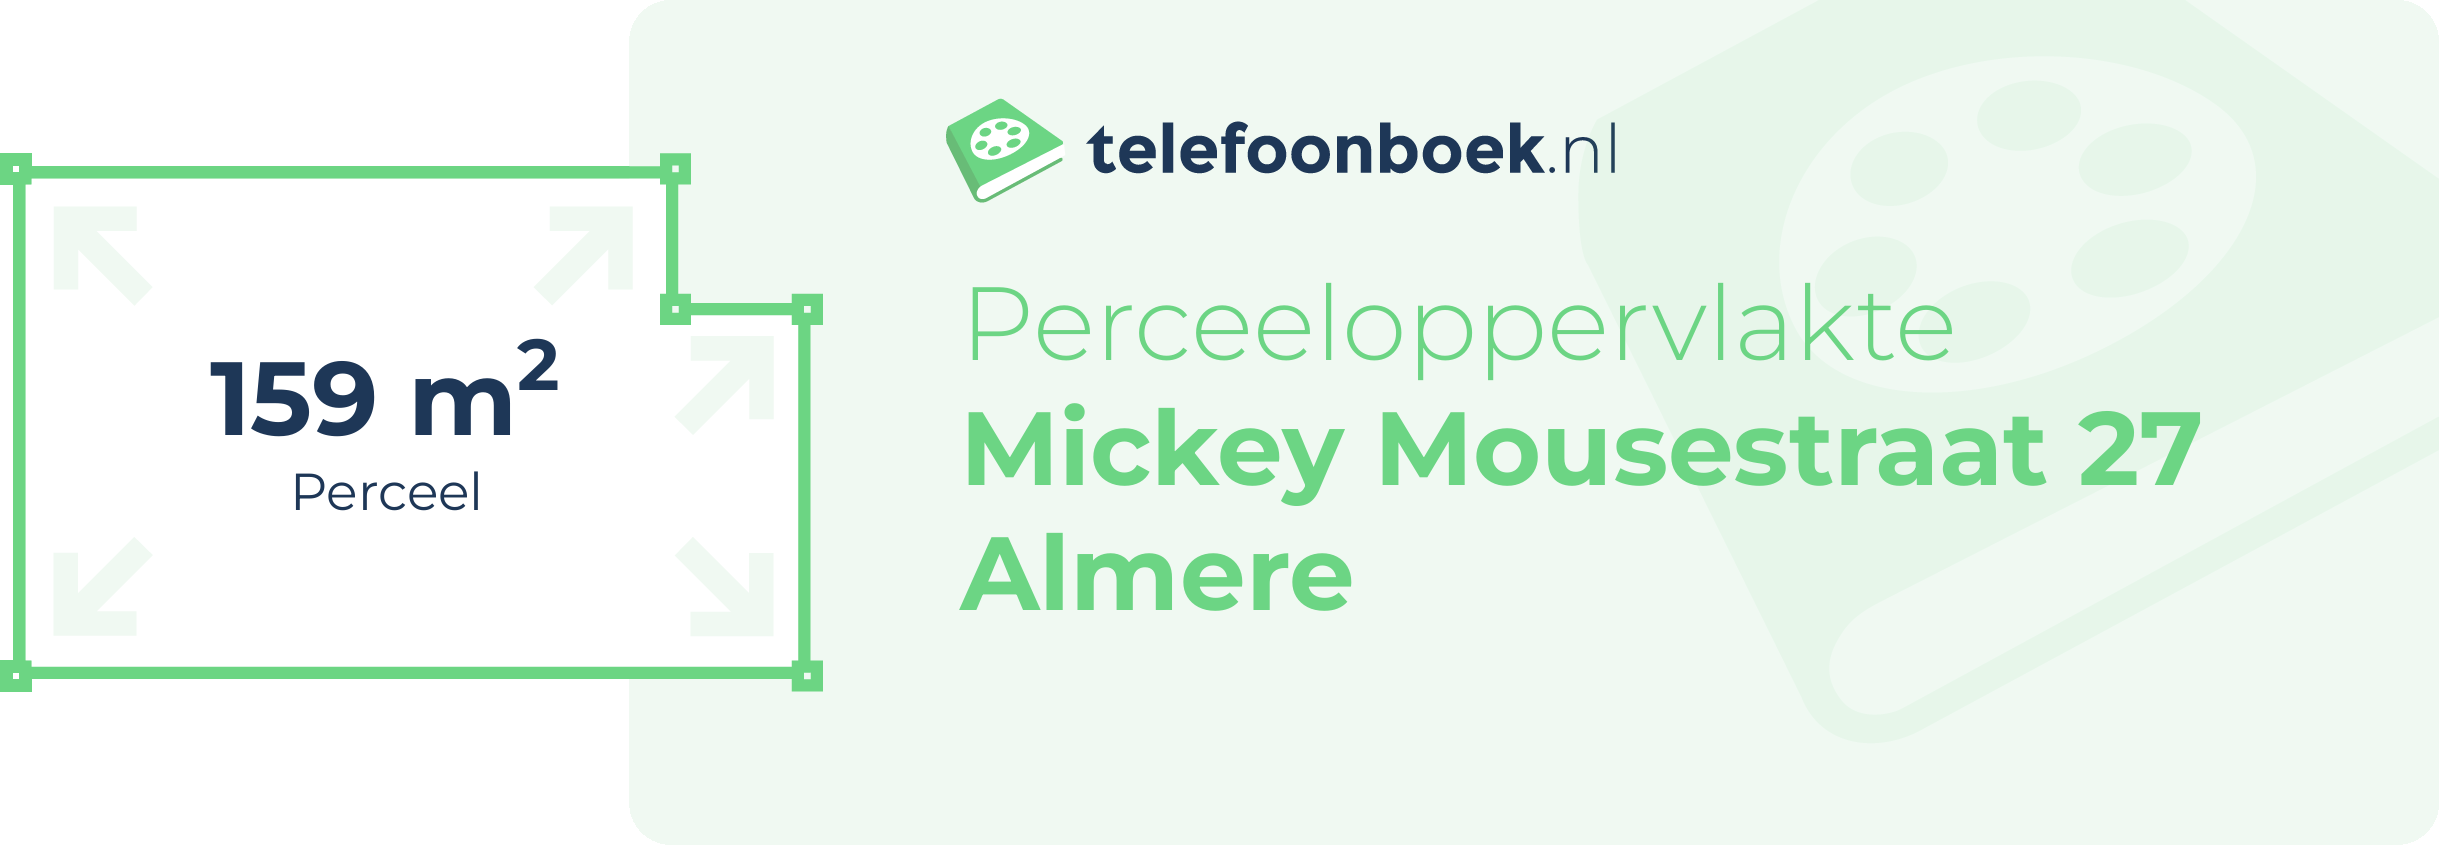 Perceeloppervlakte Mickey Mousestraat 27 Almere